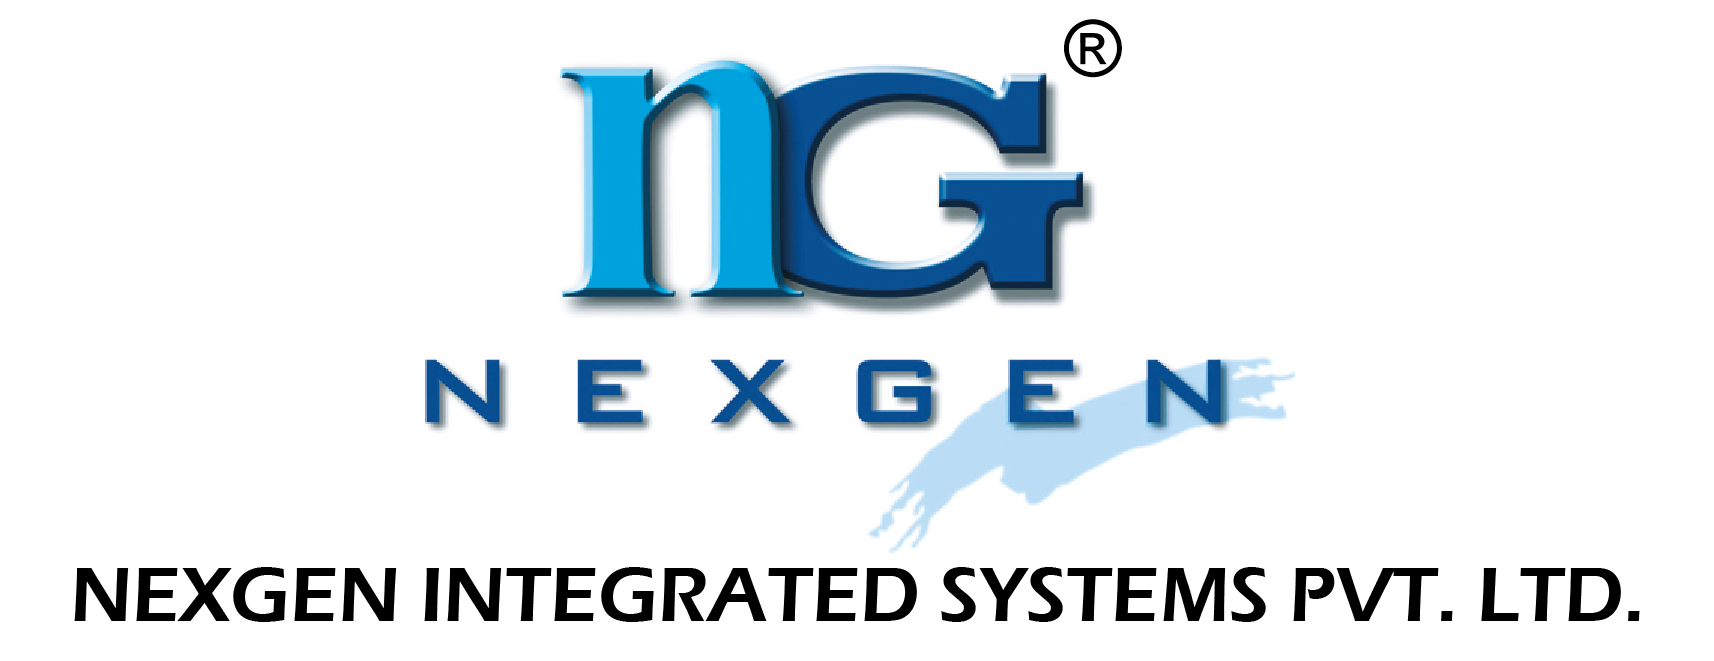 NexGen Integrated Systems Pvt. Ltd.